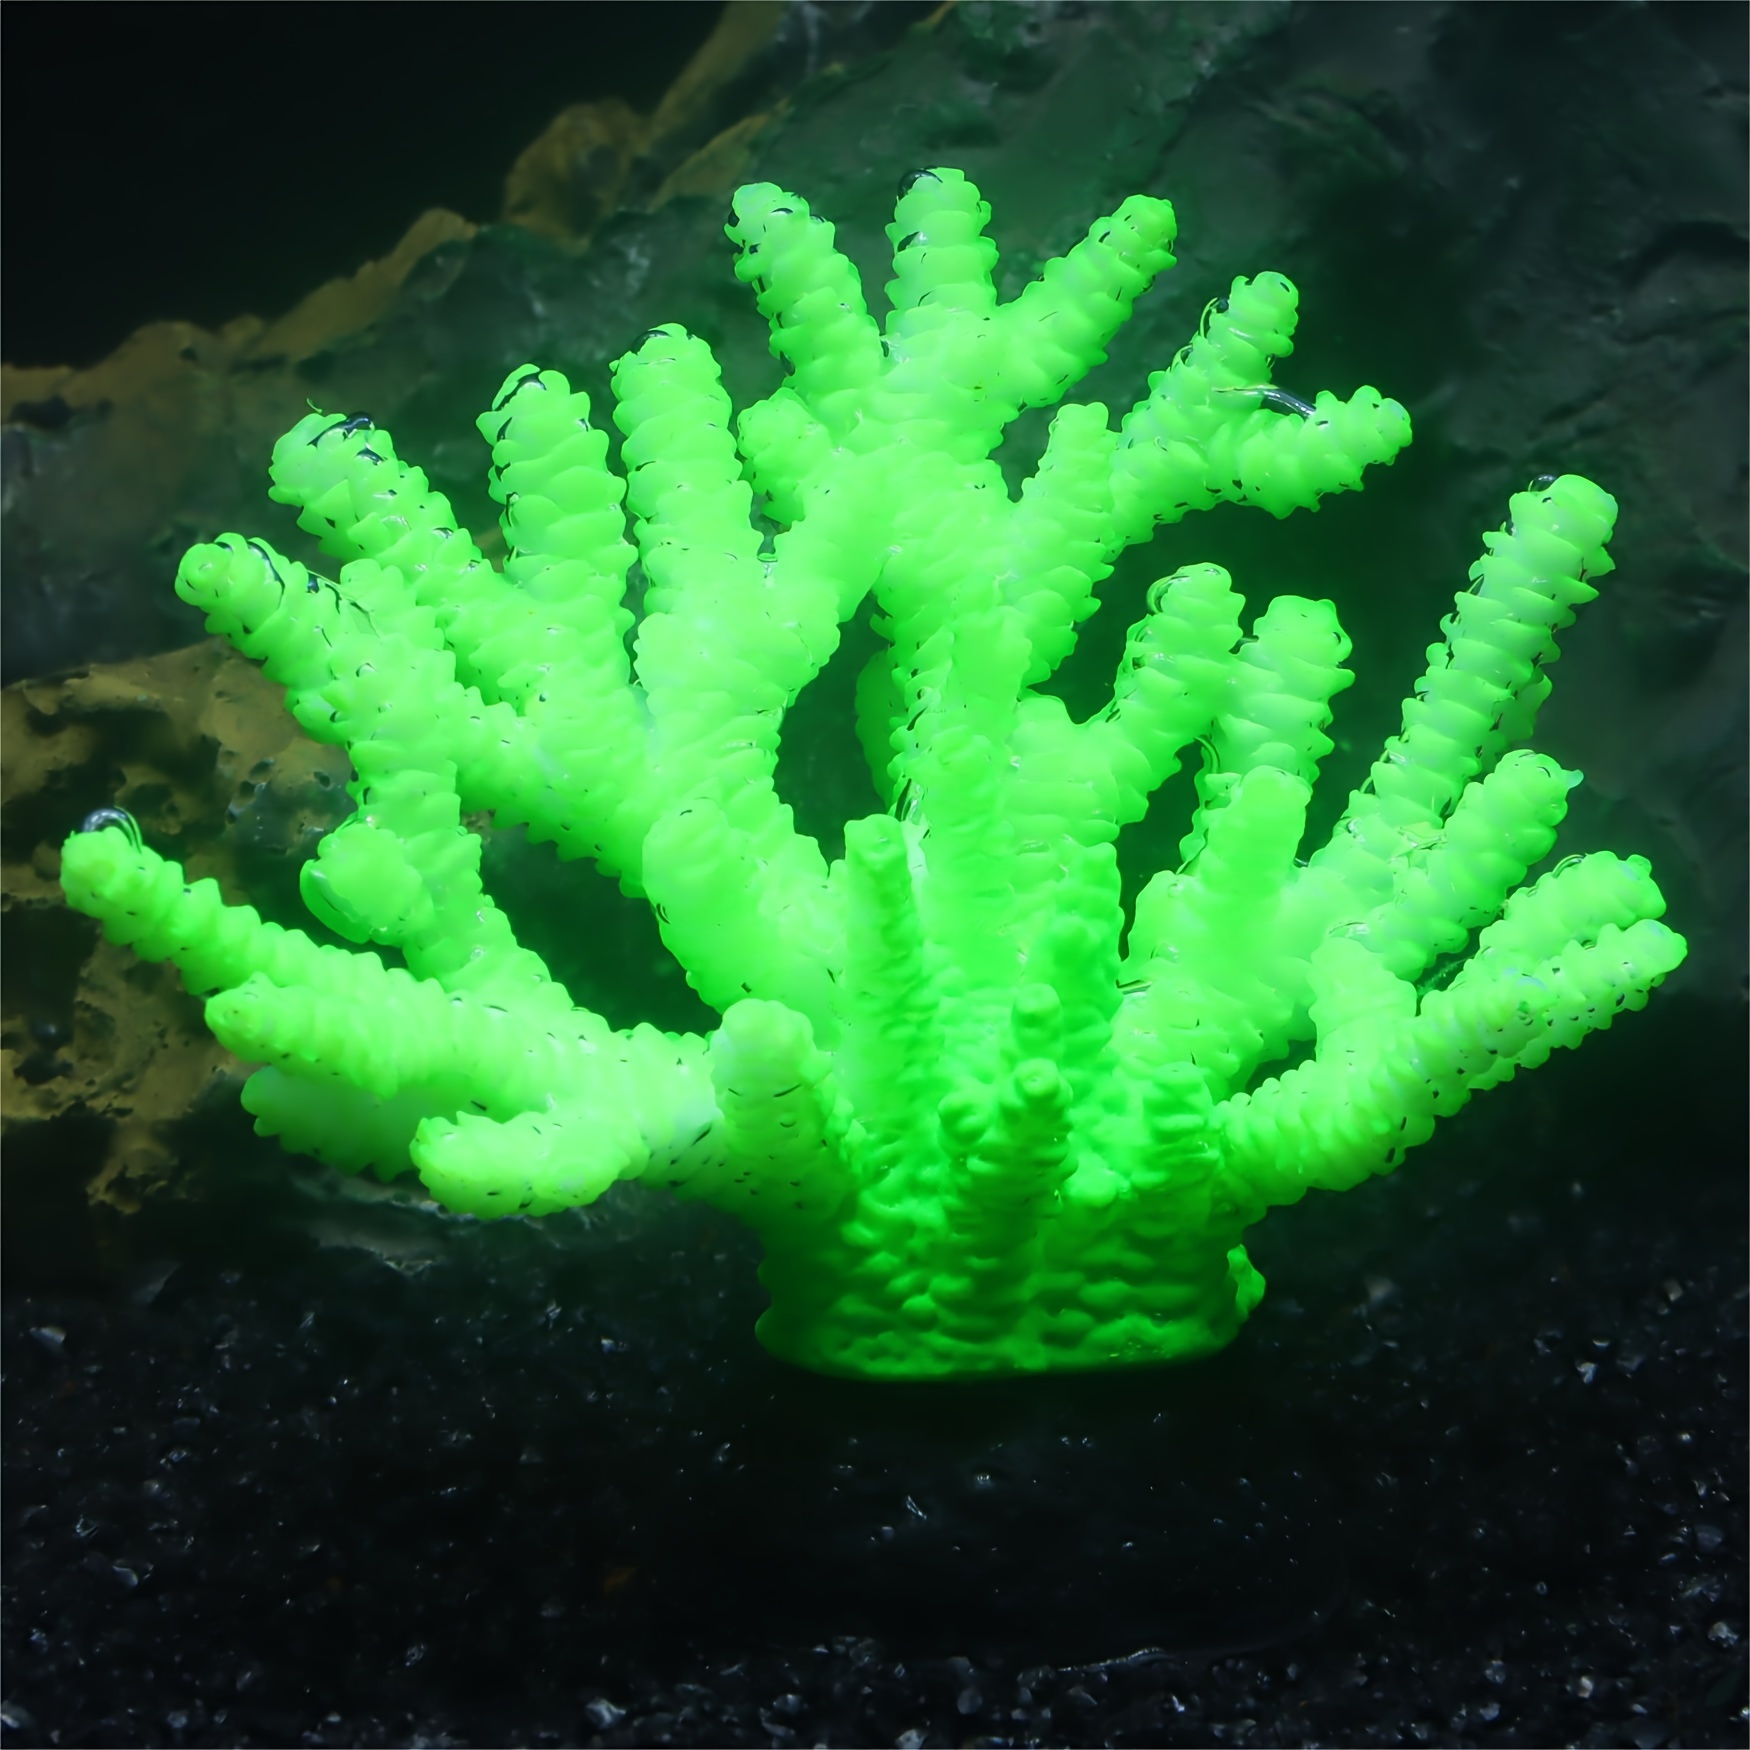 

Glowing Coral Aquarium Decoration - Silicone Fish Tank Ornament - Blue & Green Antler Coral Design